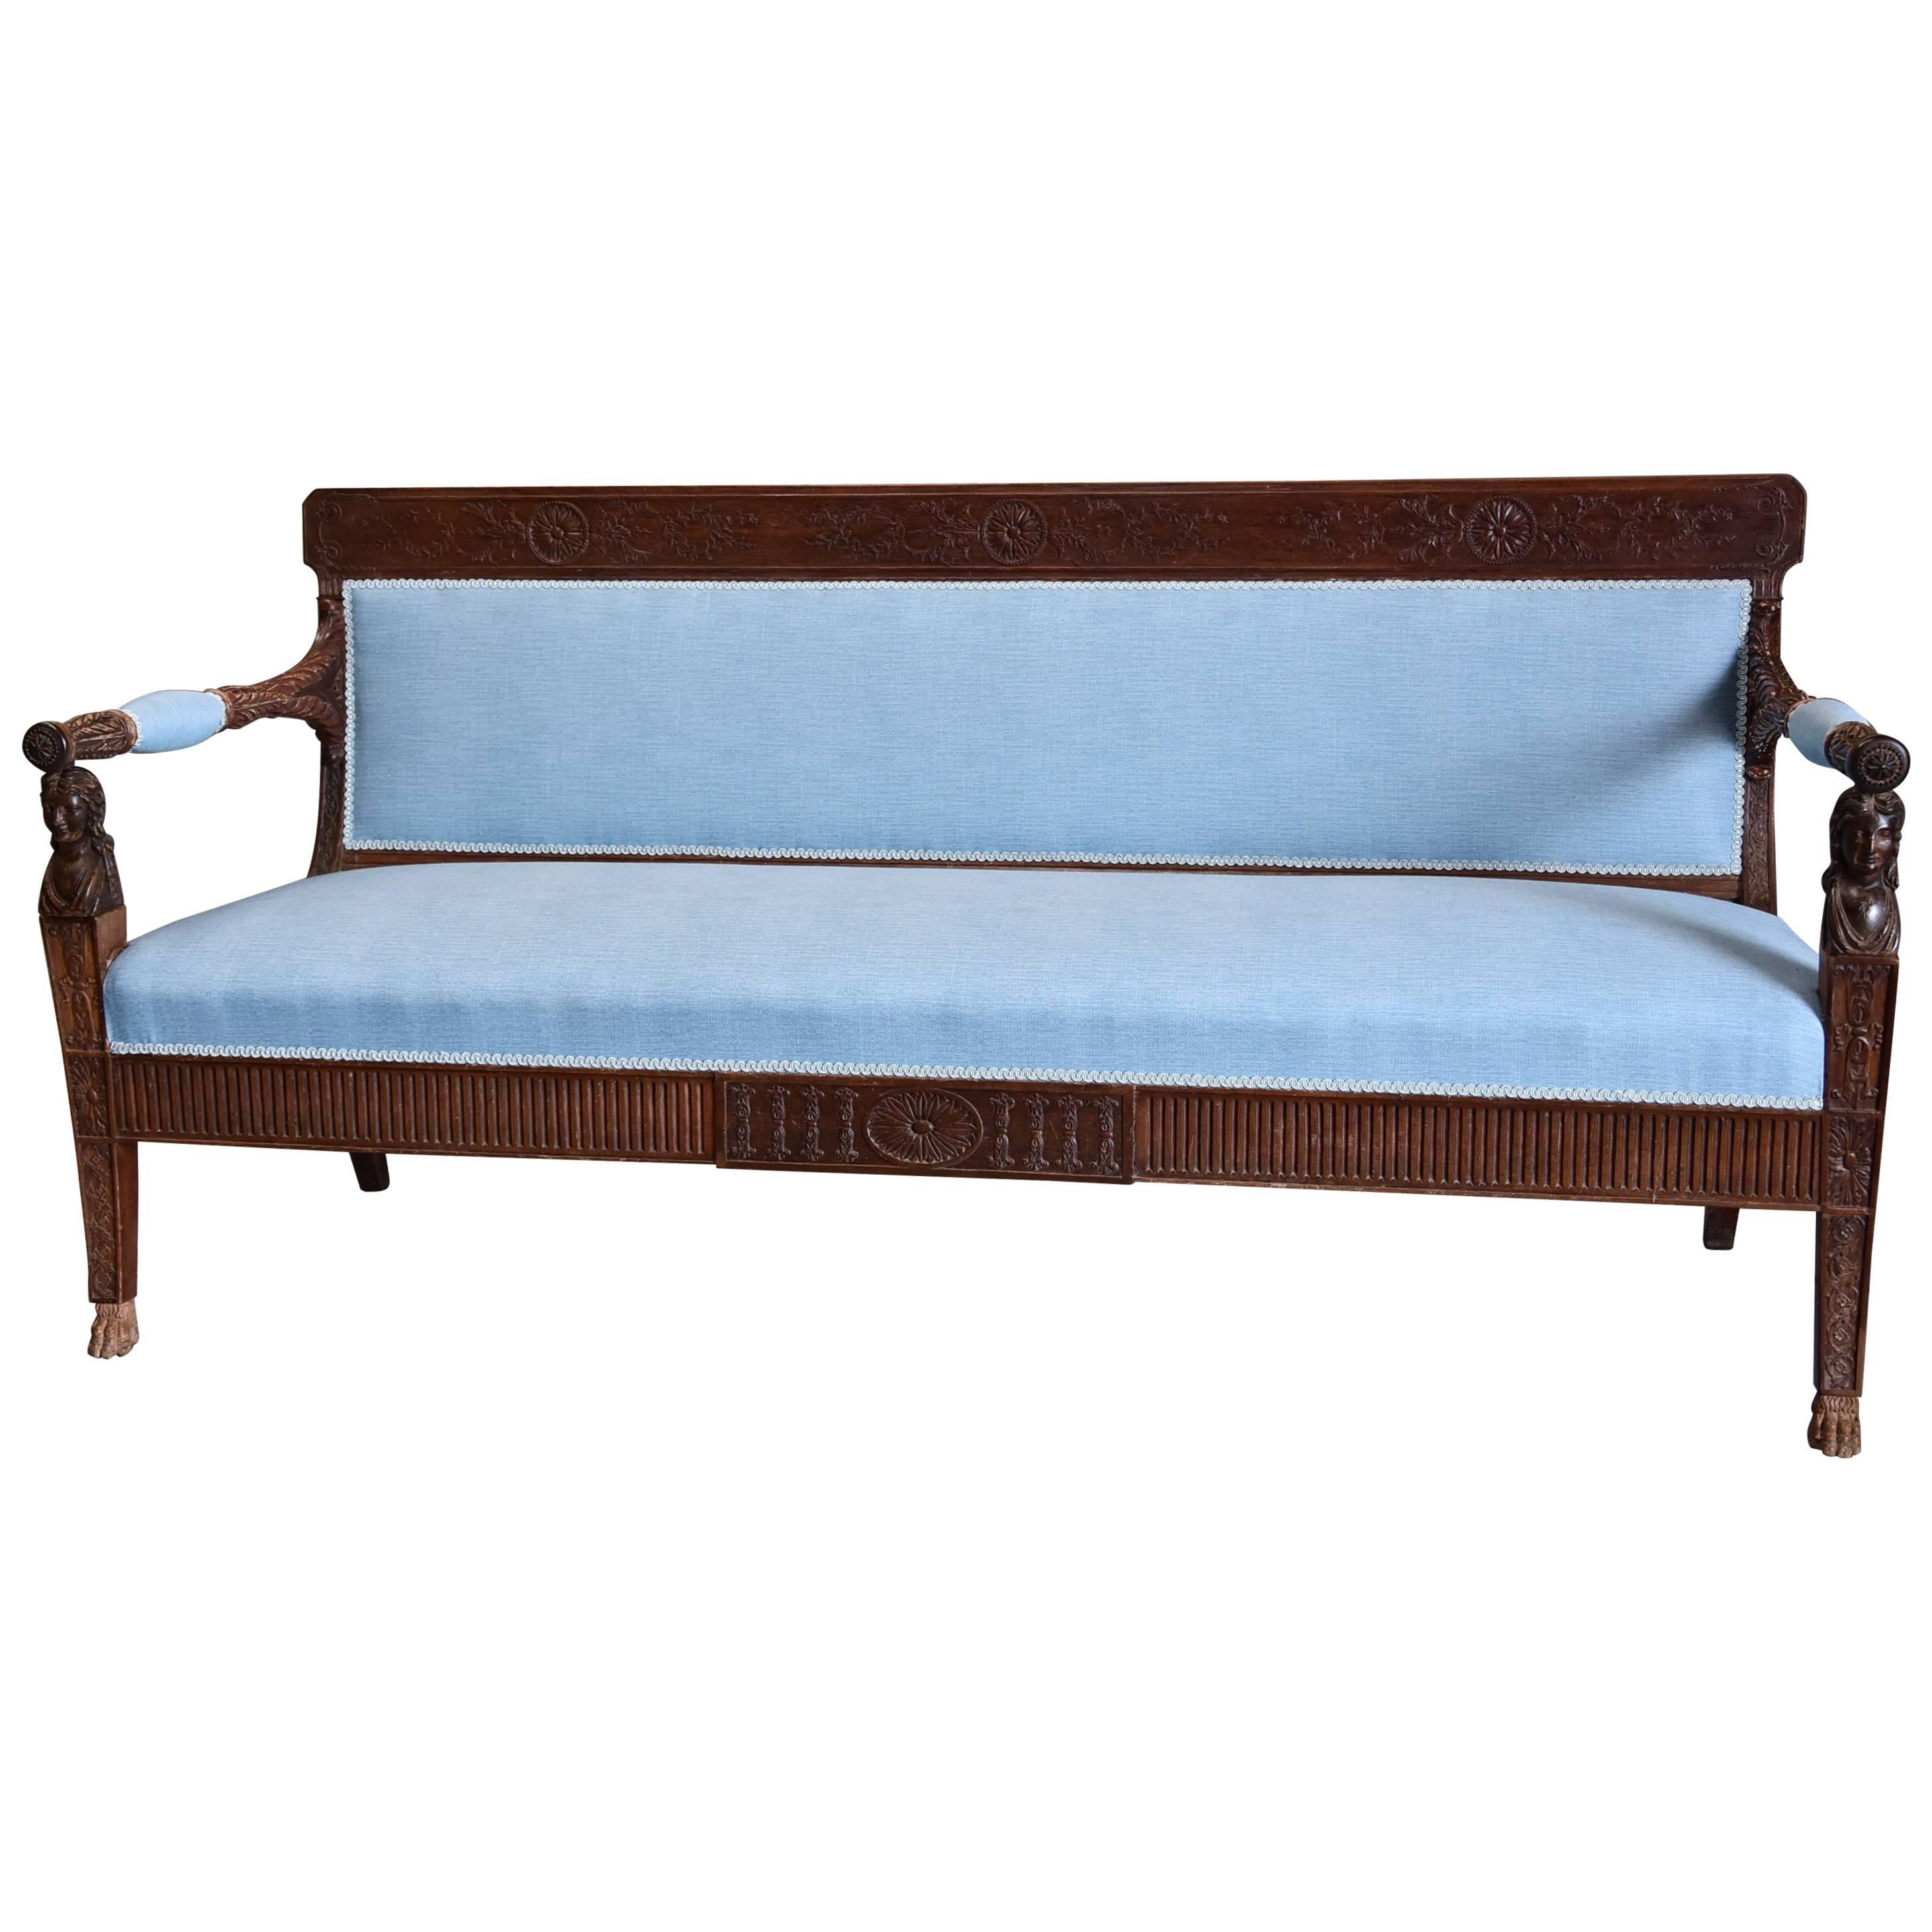 Late 18th Century Rare Walnut Italian Sofa 'Canape' of Neoclassical Design For Sale